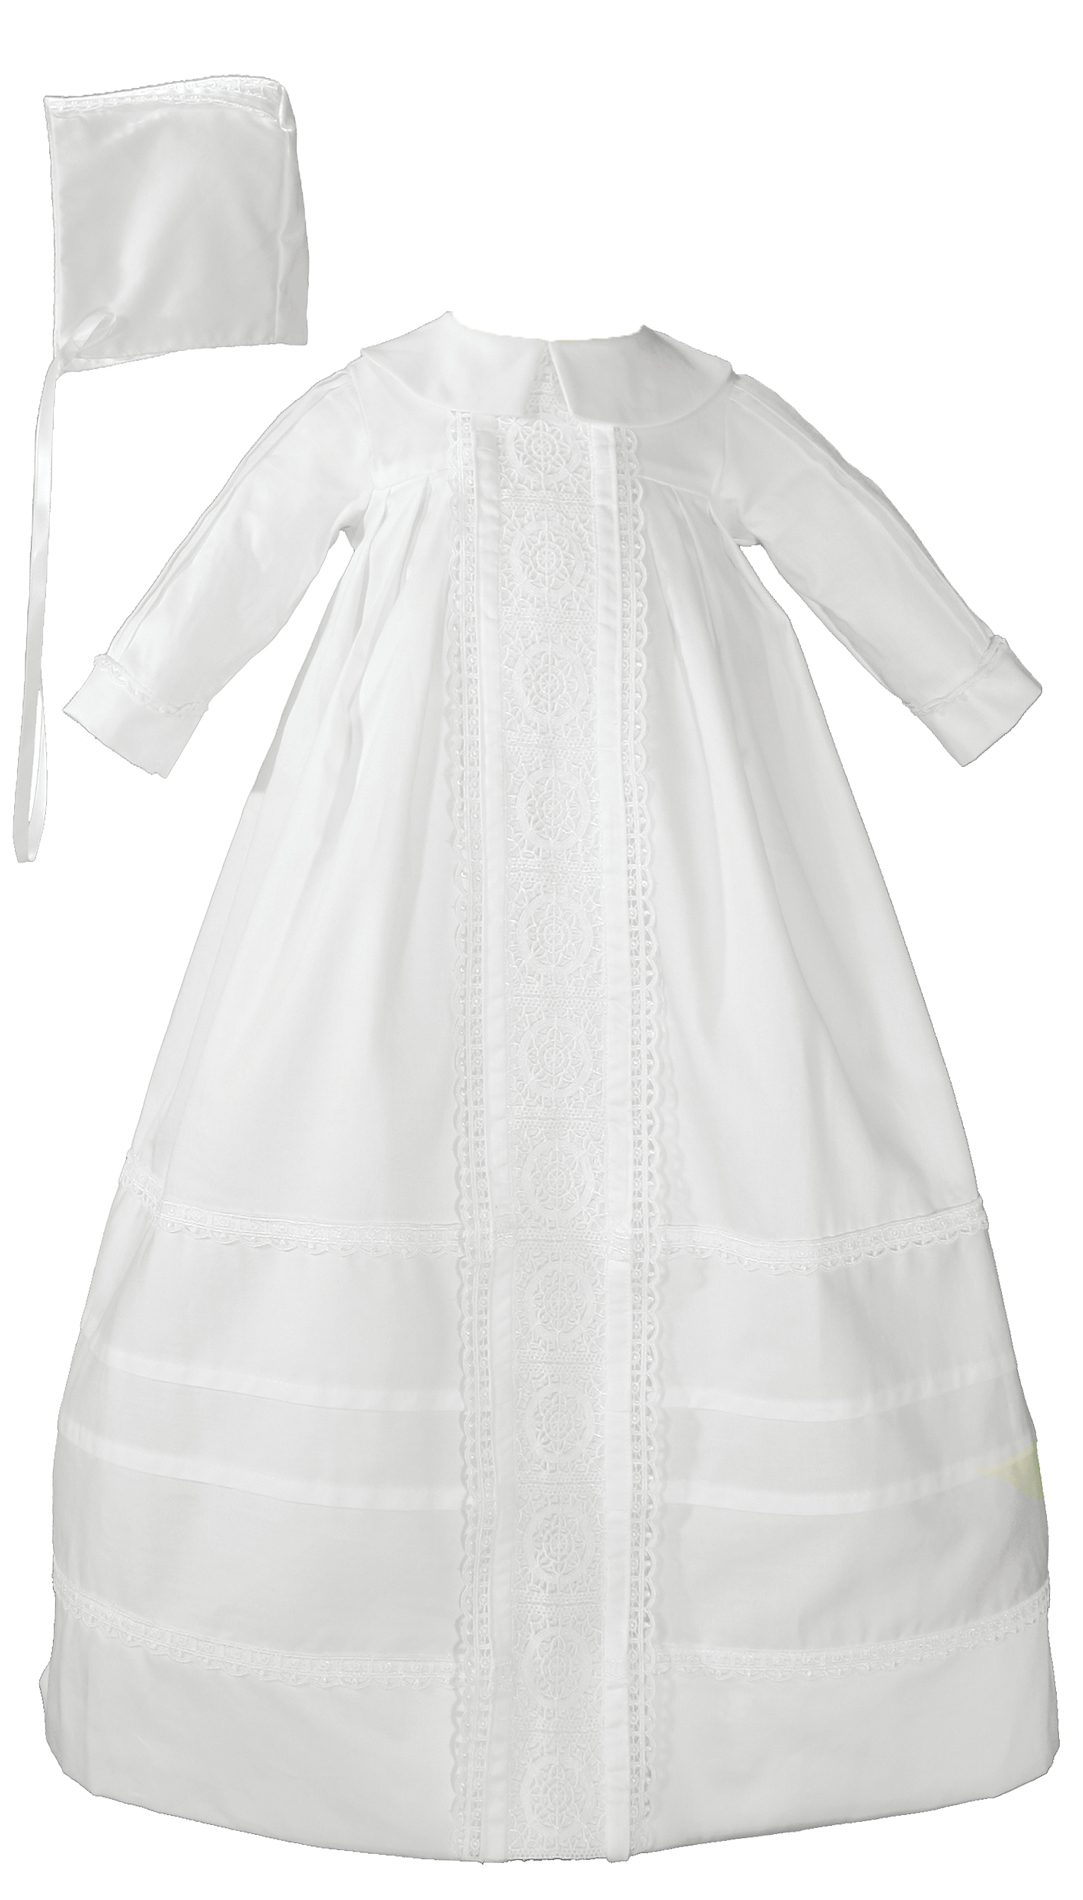 traditional christening dress